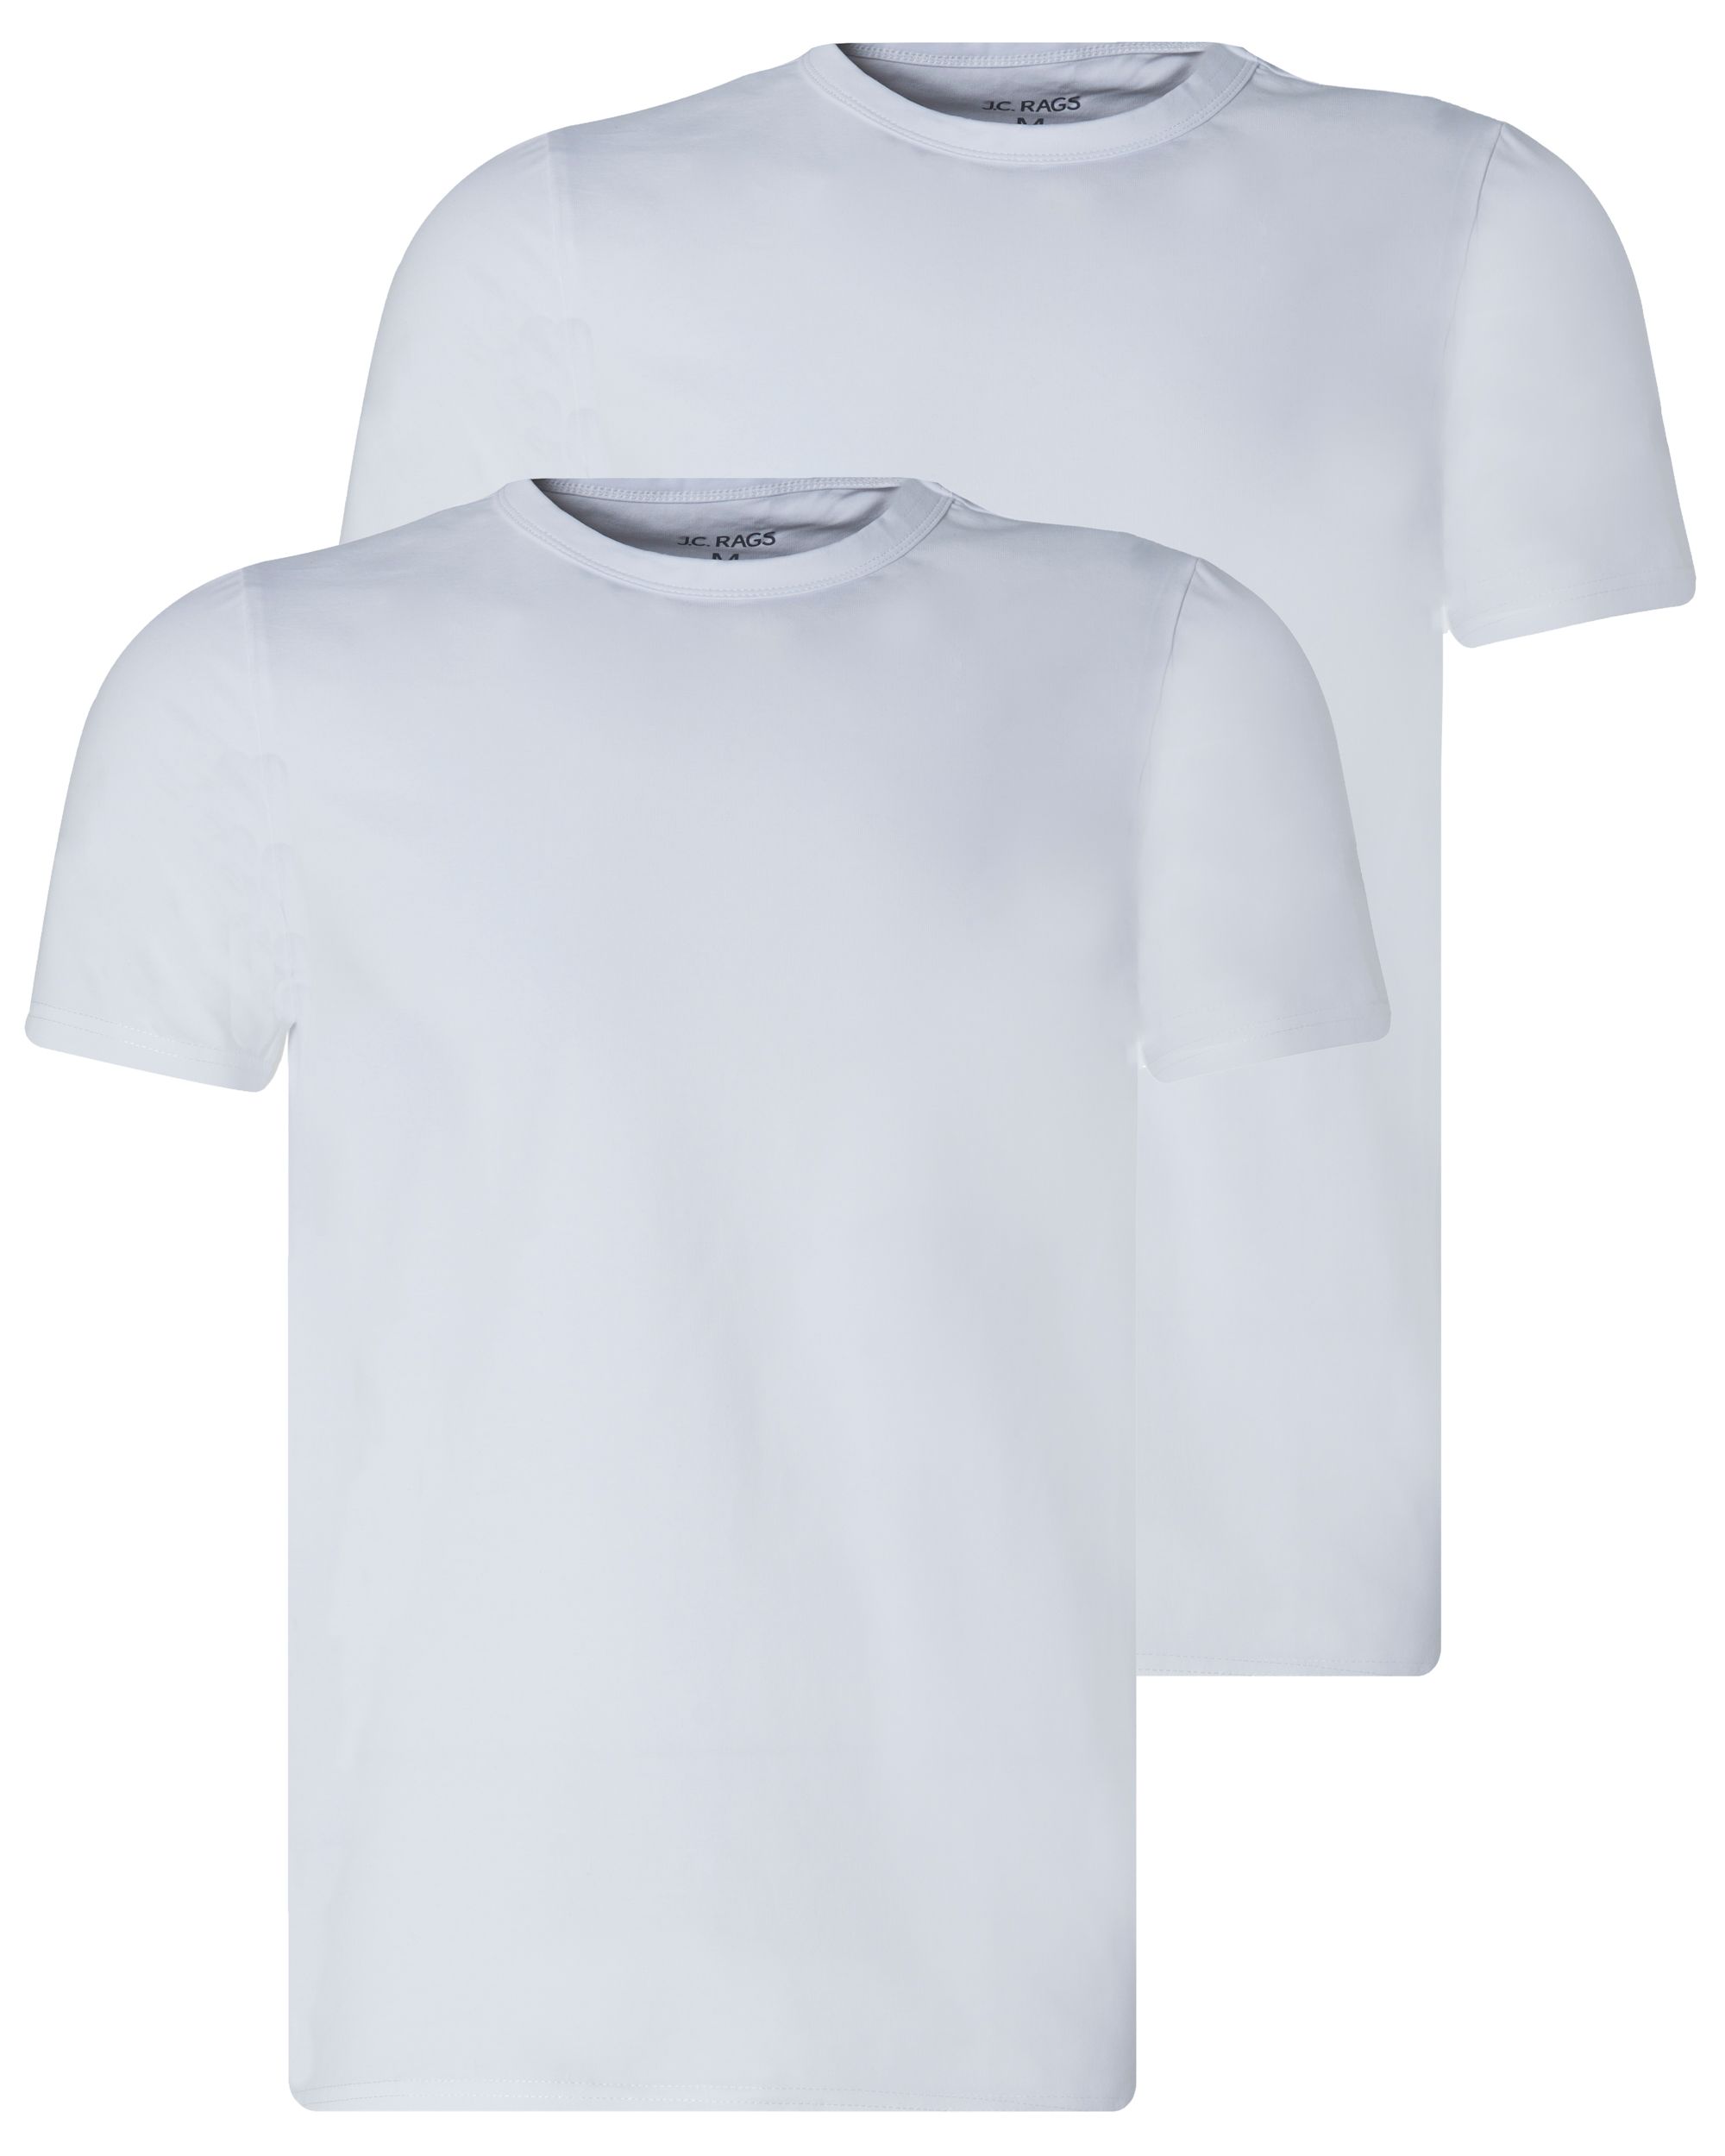 Gedwongen moersleutel Gymnastiek J.C. RAGS Basic T-shirt KM 2-pack | Shop nu - Only for Men